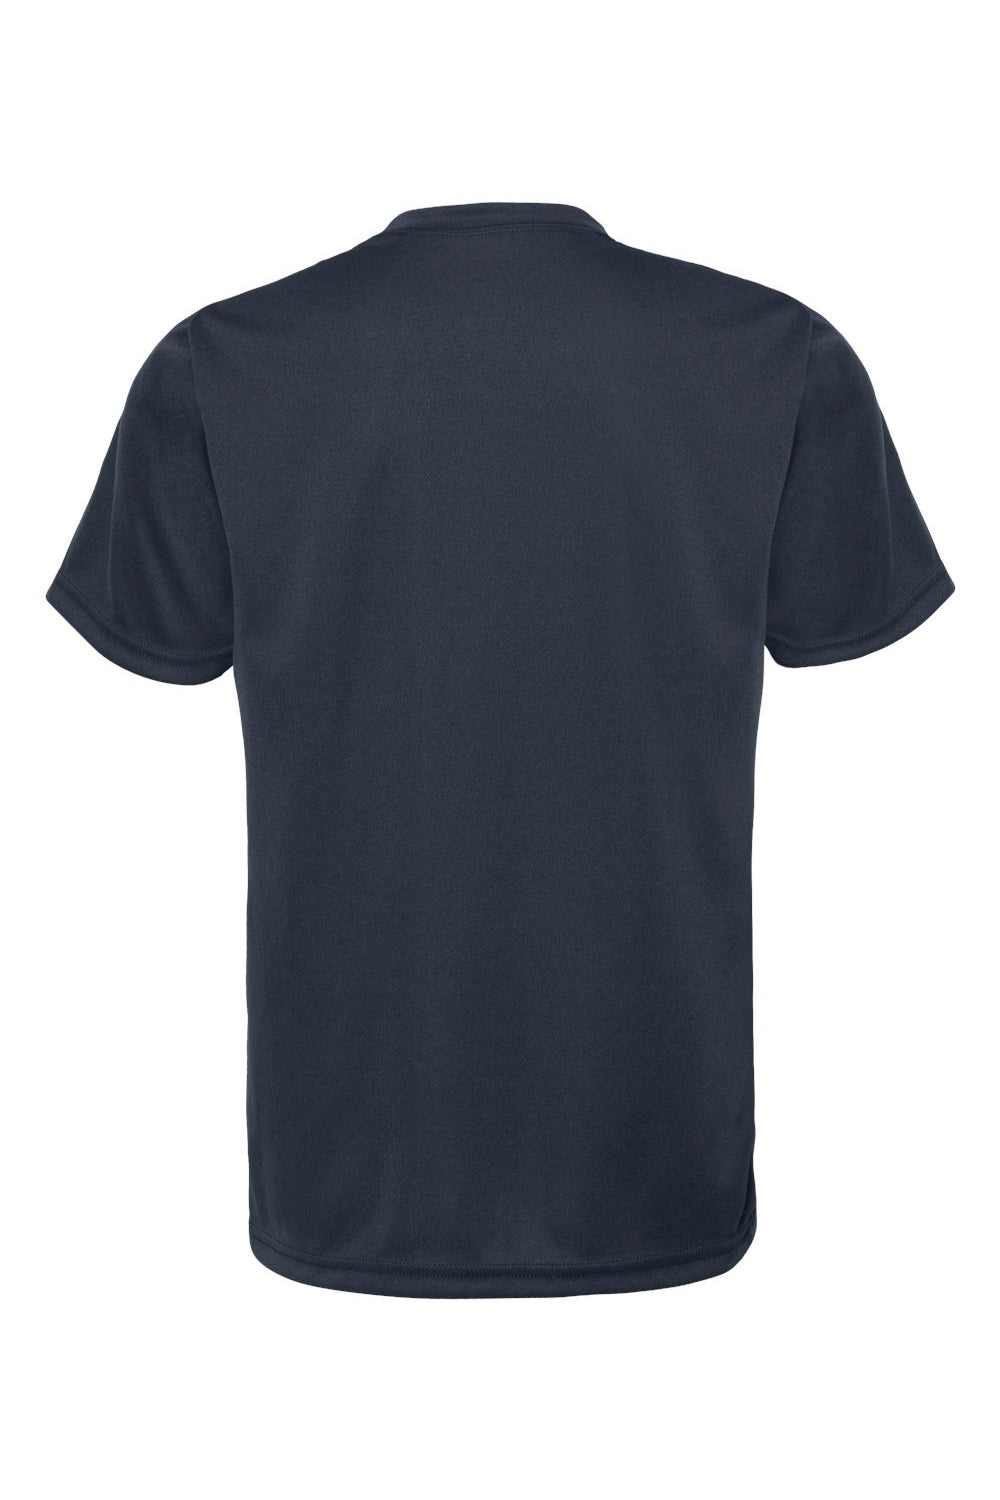 C2 Sport 5200 Youth Performance Moisture Wicking Short Sleeve Crewneck T-Shirt Navy Blue Flat Back